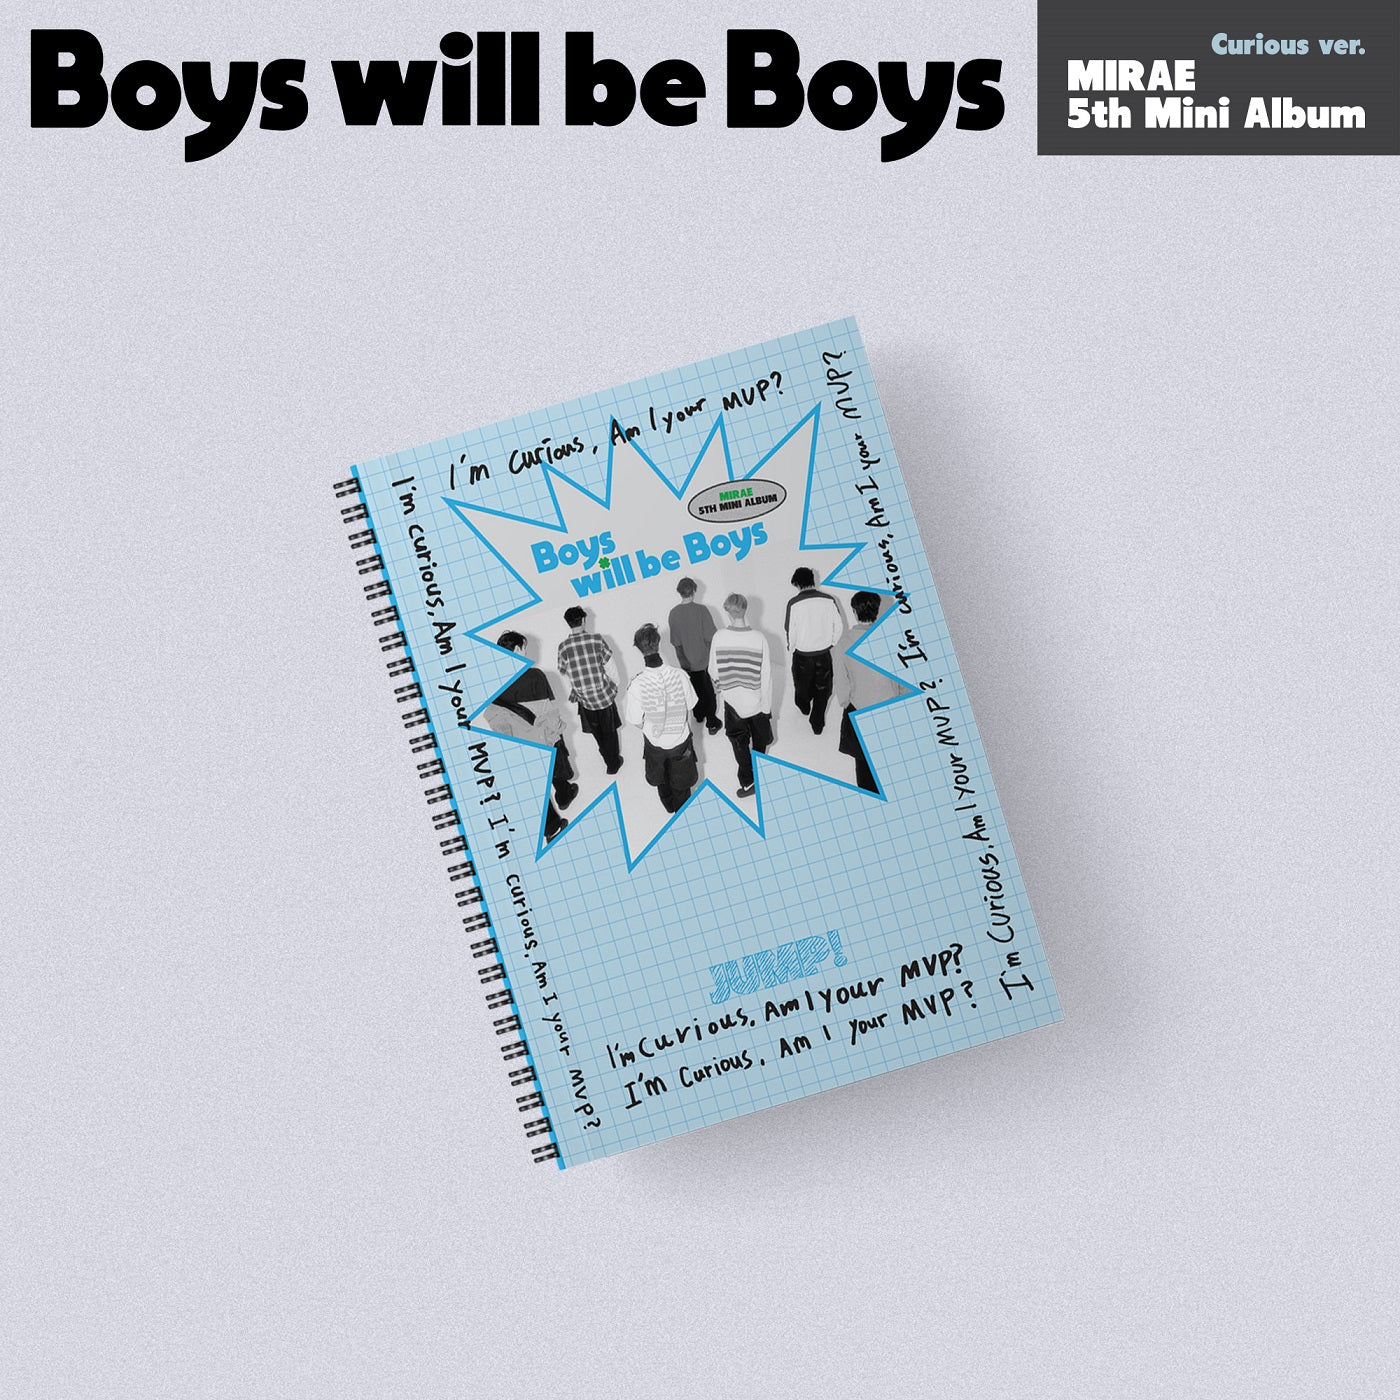 MIRAE 5TH MINI ALBUM 'BOYS WILL BE BOYS' CURIOUS VERSION COVER